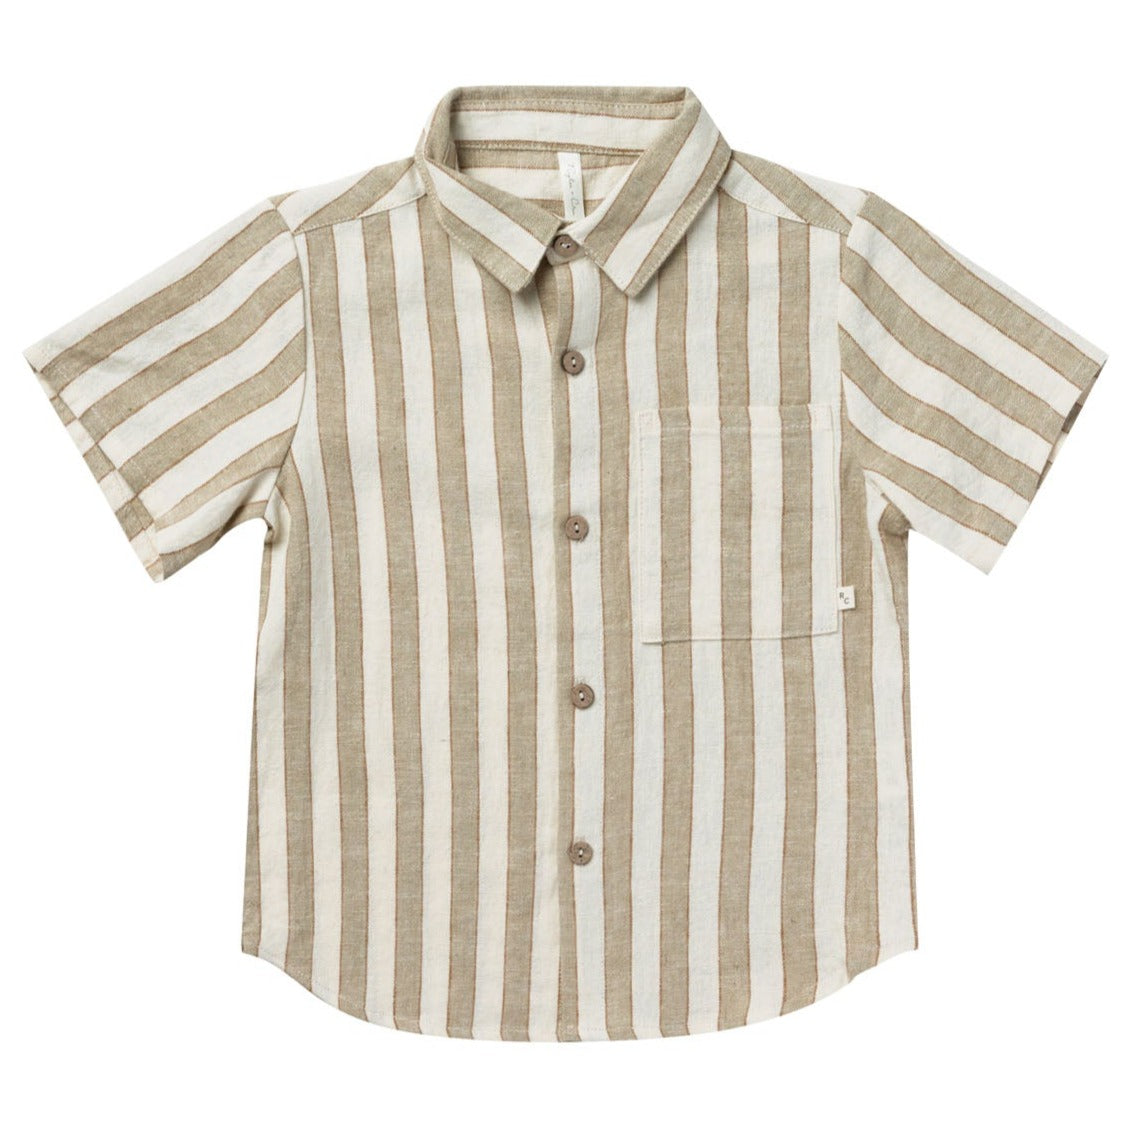 Rylee & Cru Collared Short Sleeve Shirt, Autumn Stripe